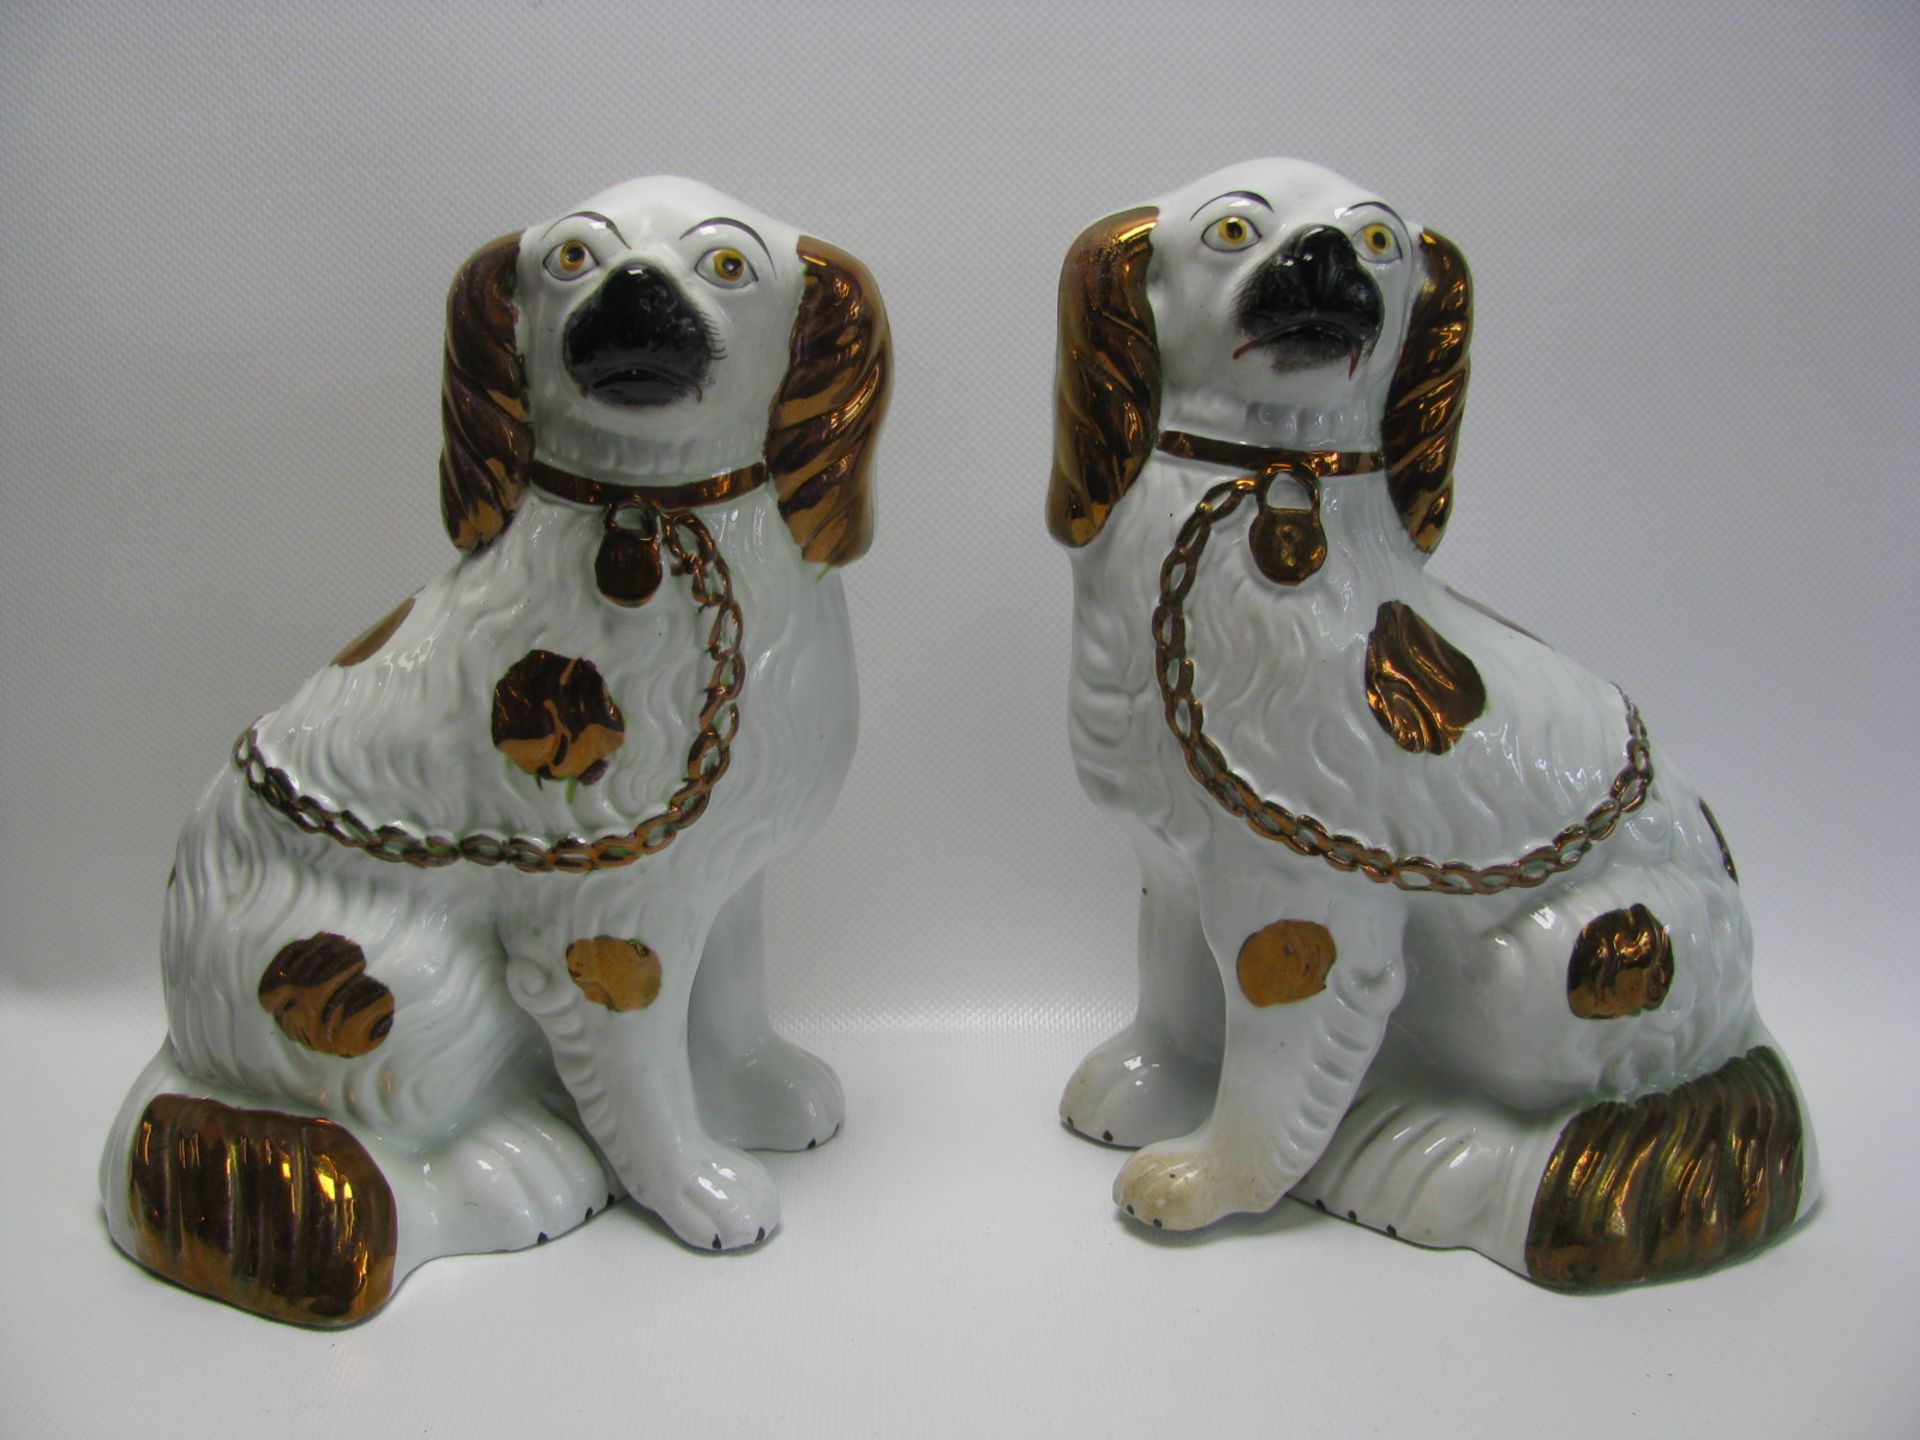 Paar Staffordshire Hunde, sog. "Puffhunde", England, Keramik polychrom glasiert, h 24 cm, d 18 cm.